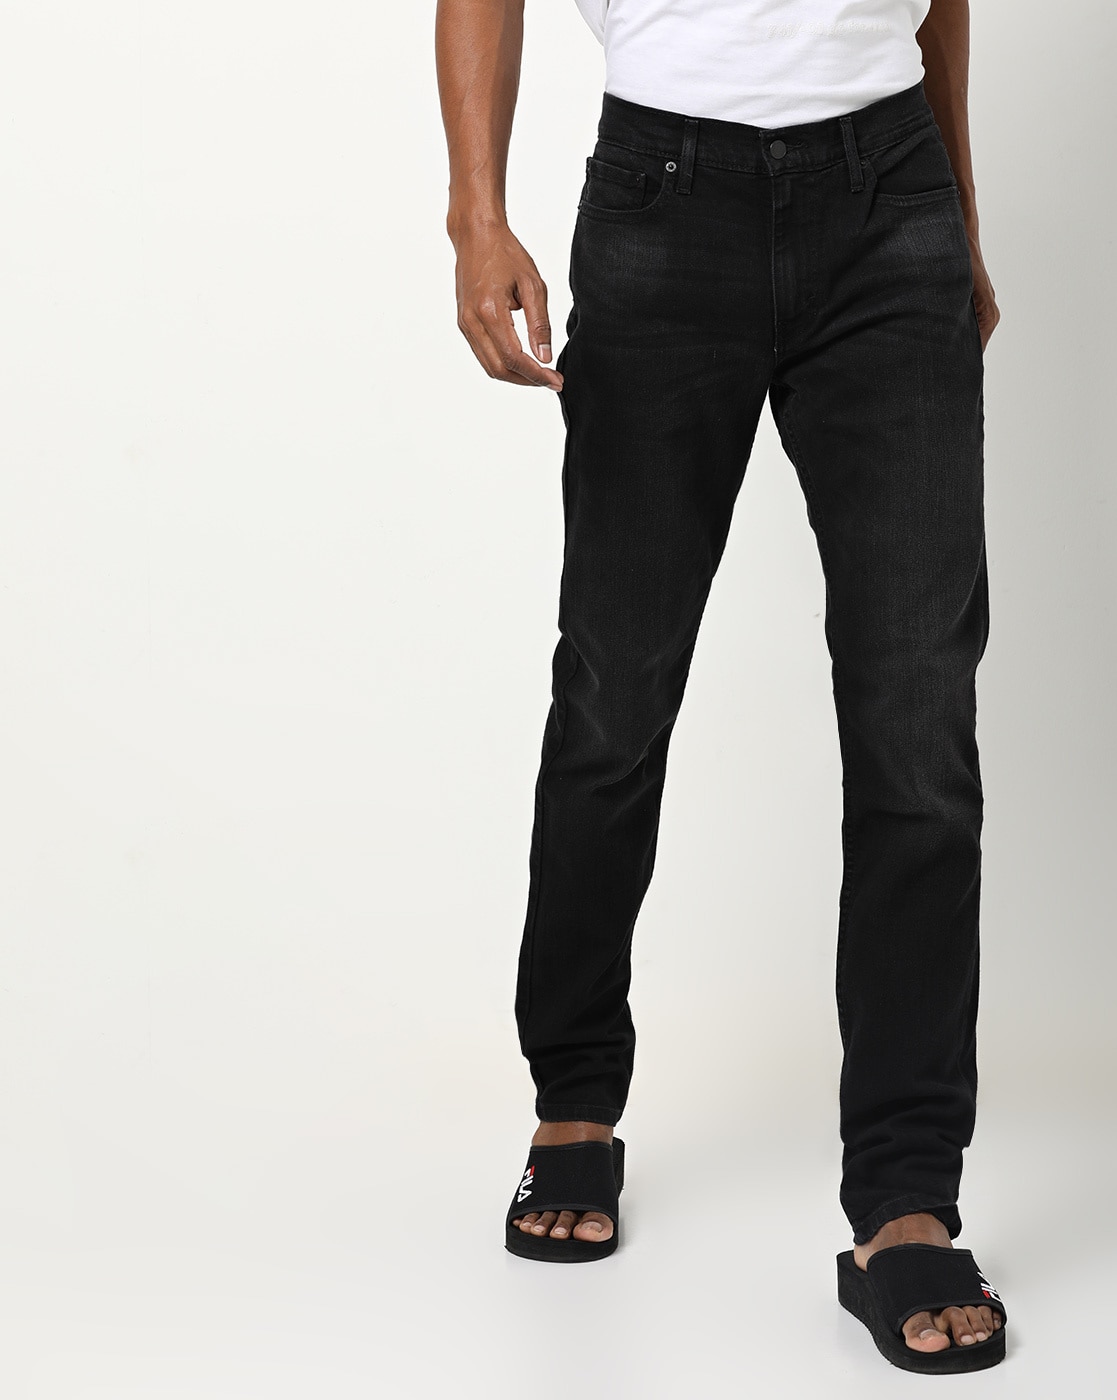 Womens 721 Black Skinny Jeans